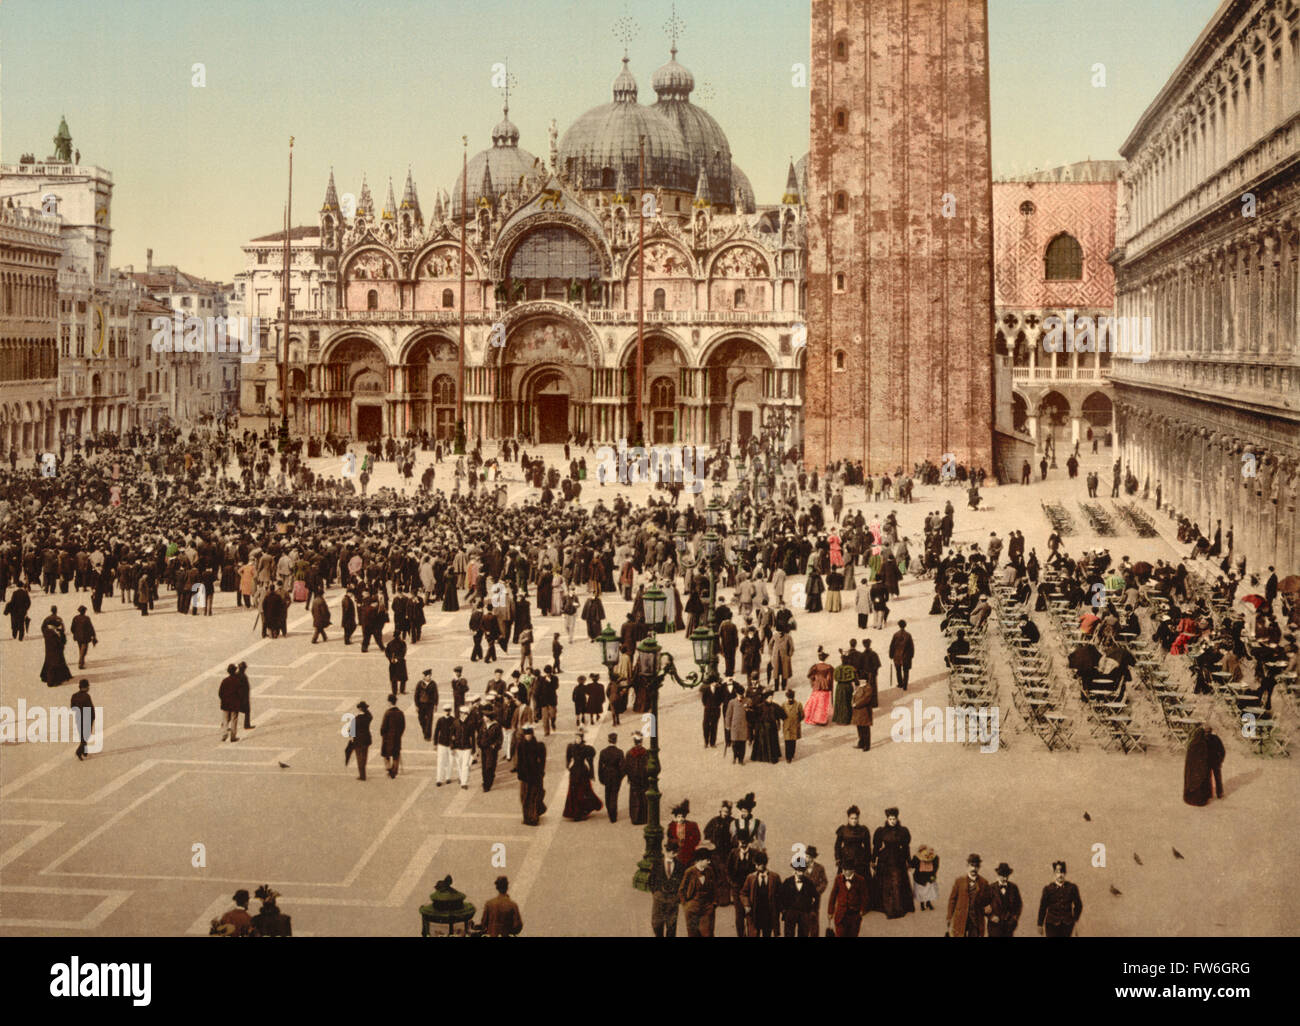 Konzert, Markusplatz, Venedig, Italien, Photochrome Print, um 1900 Stockfoto